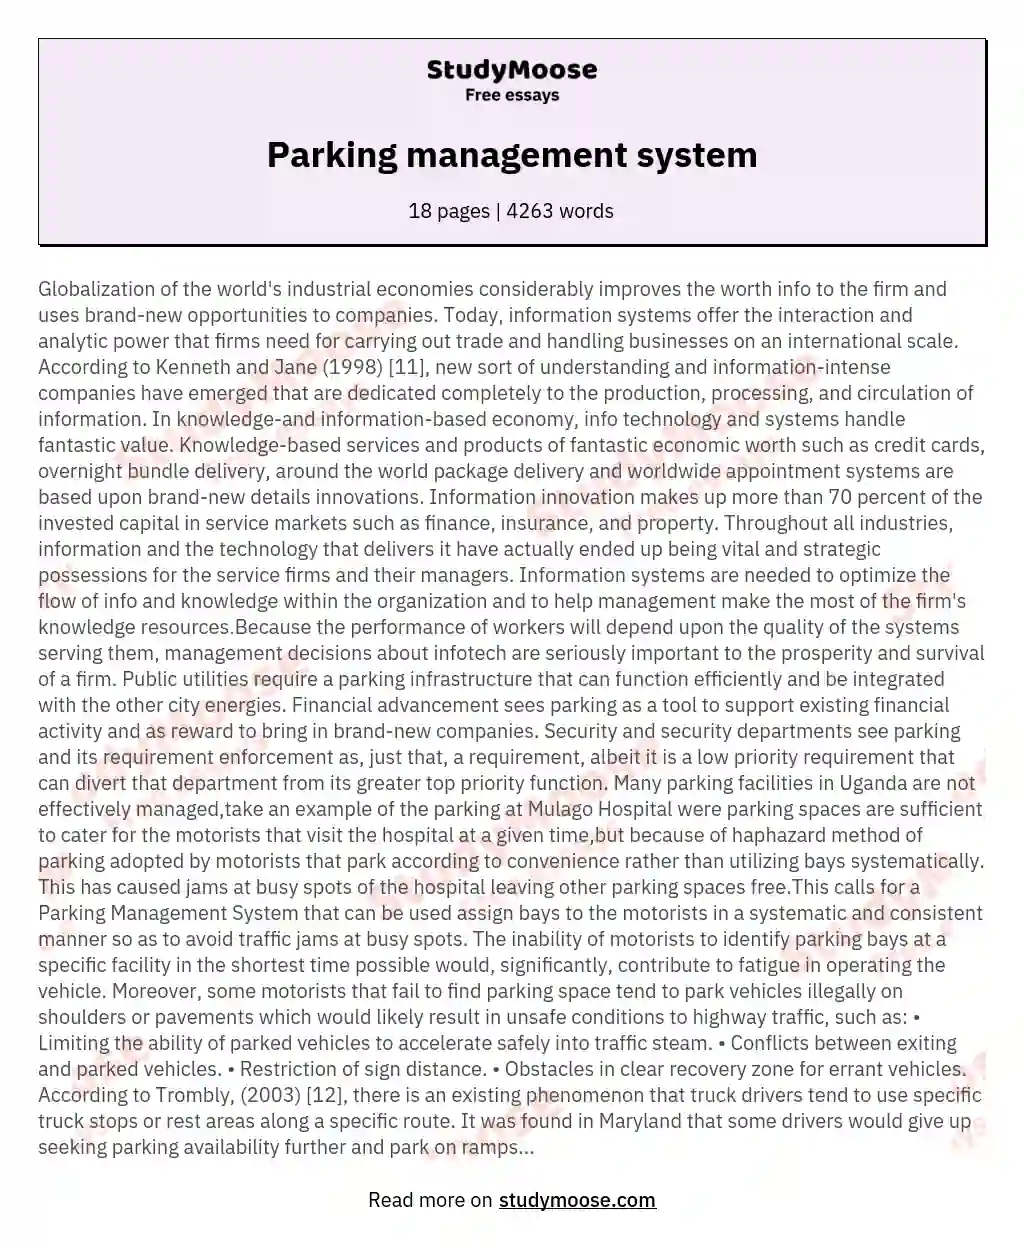 Parking management system essay